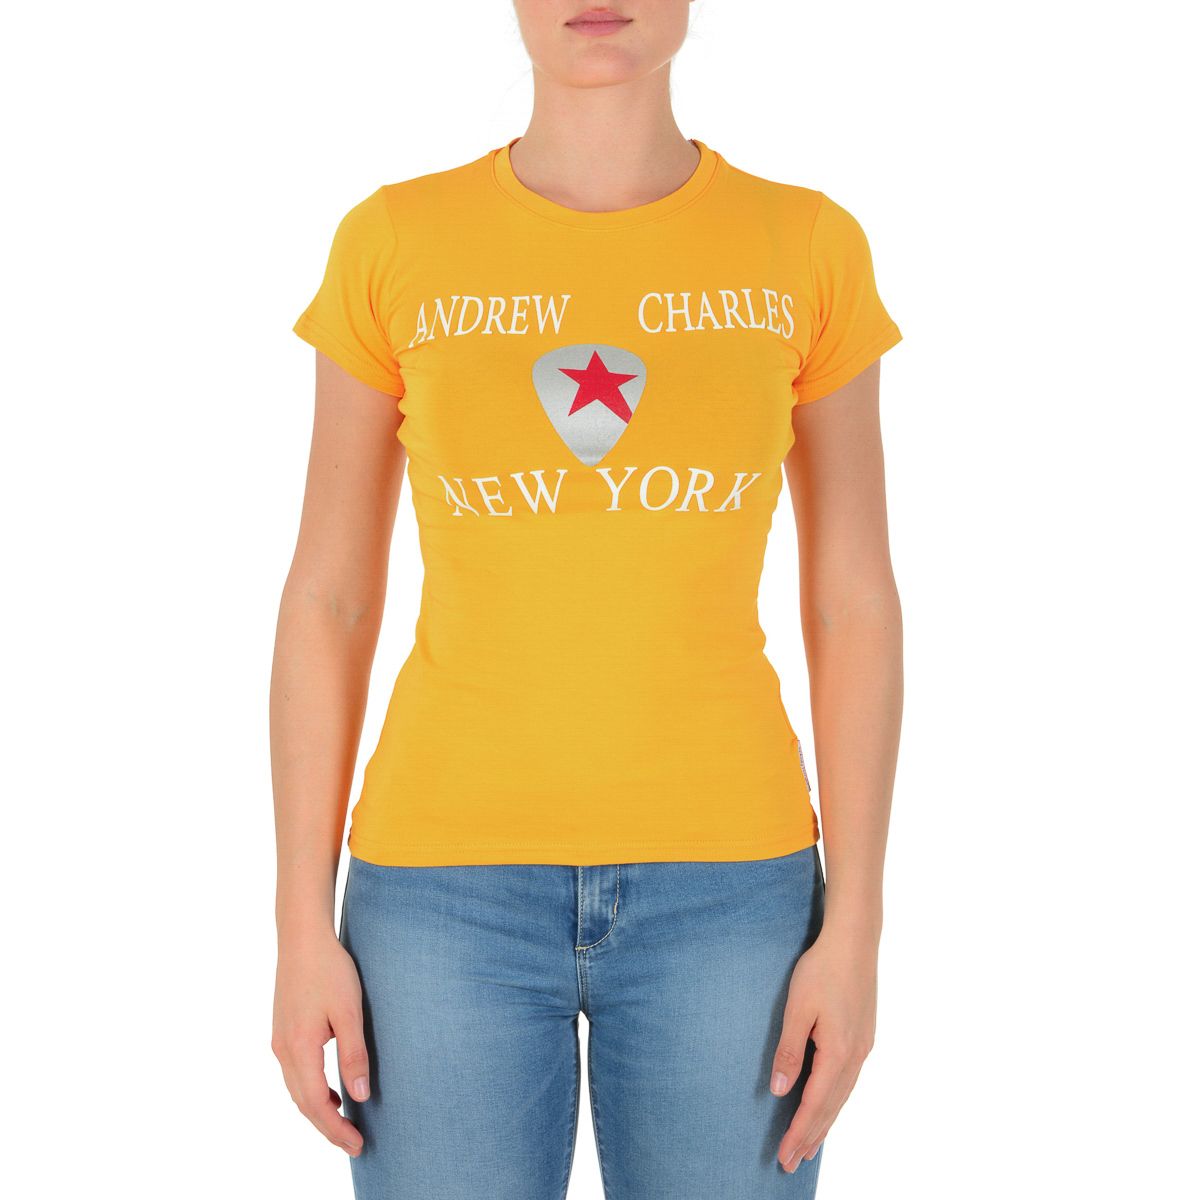 Andrew Charles By Andy Hilfiger Womens T-Shirt TS501 03 1002 TARANA YELLOW S14